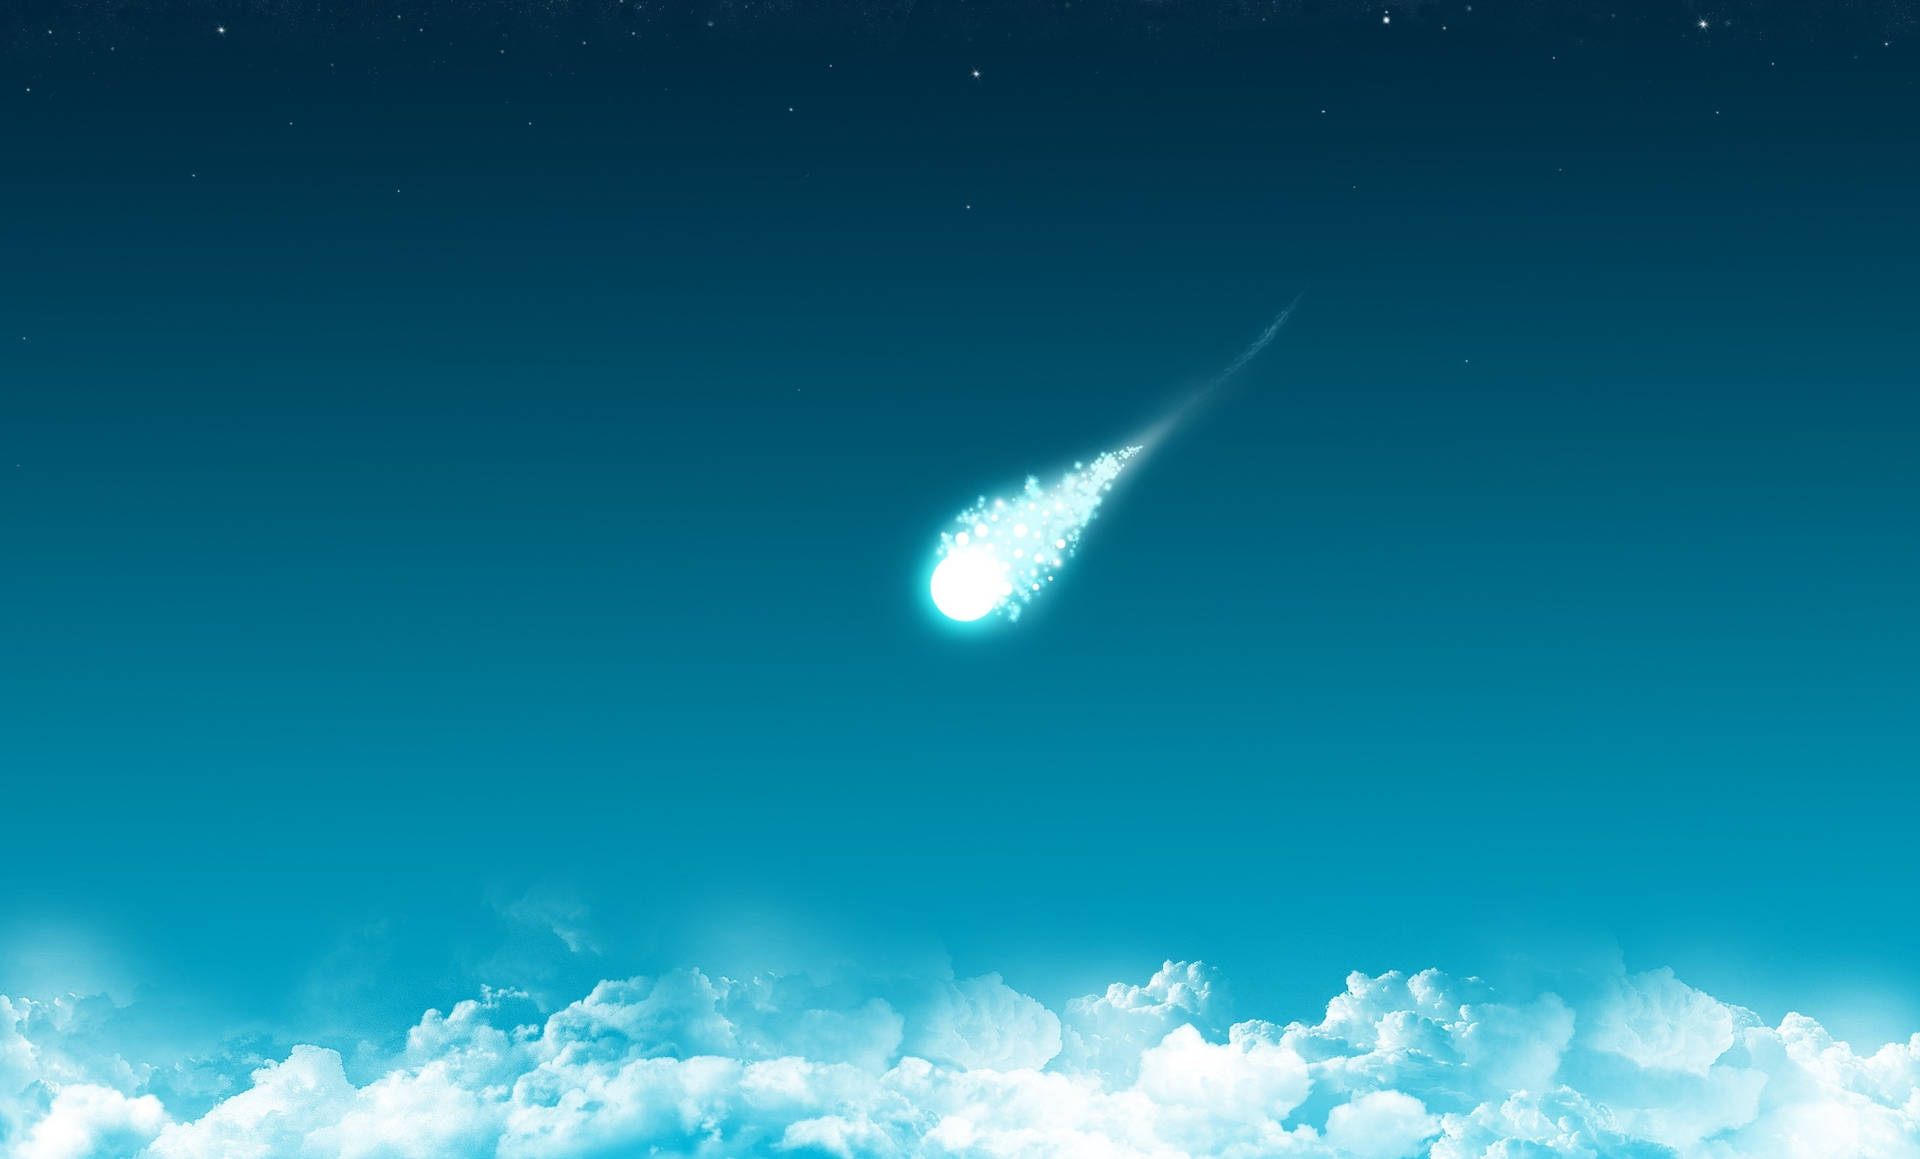 Heavenly Comet soaring through the Cloudy Skies Wallpaper